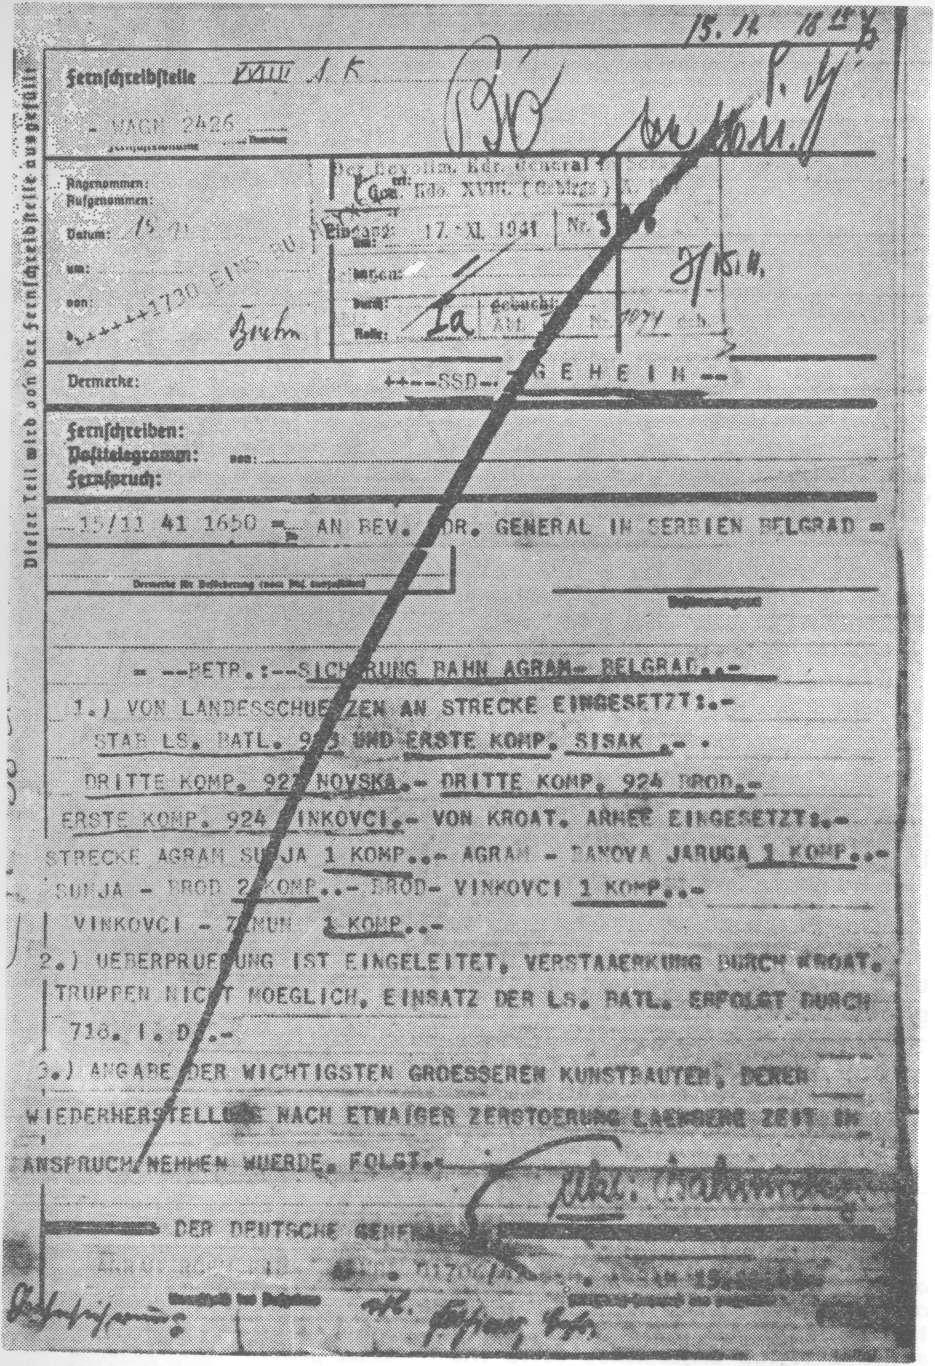 Telegram njemačkog generala u Zagrebu od 15. novembra 1941.